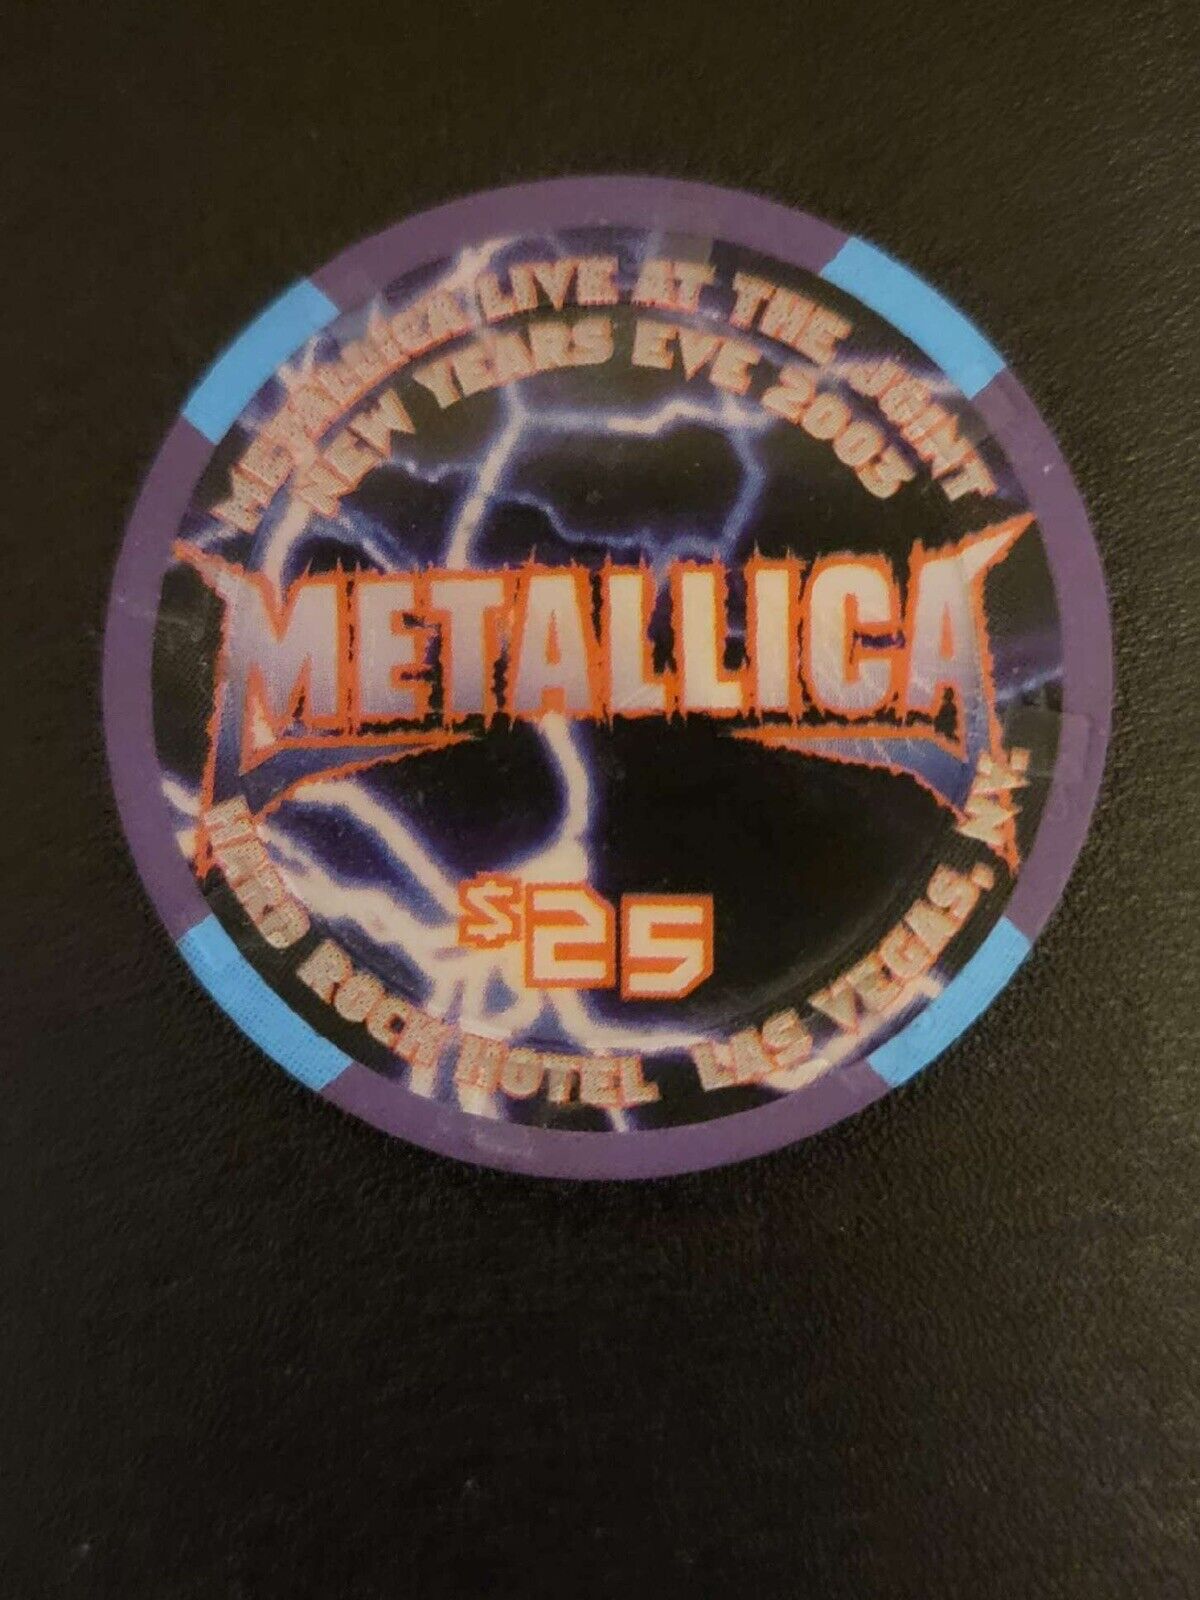 Metallica Hard Rock Casino Chip Las Vegas New Years Eve 2003 Discontinued $25